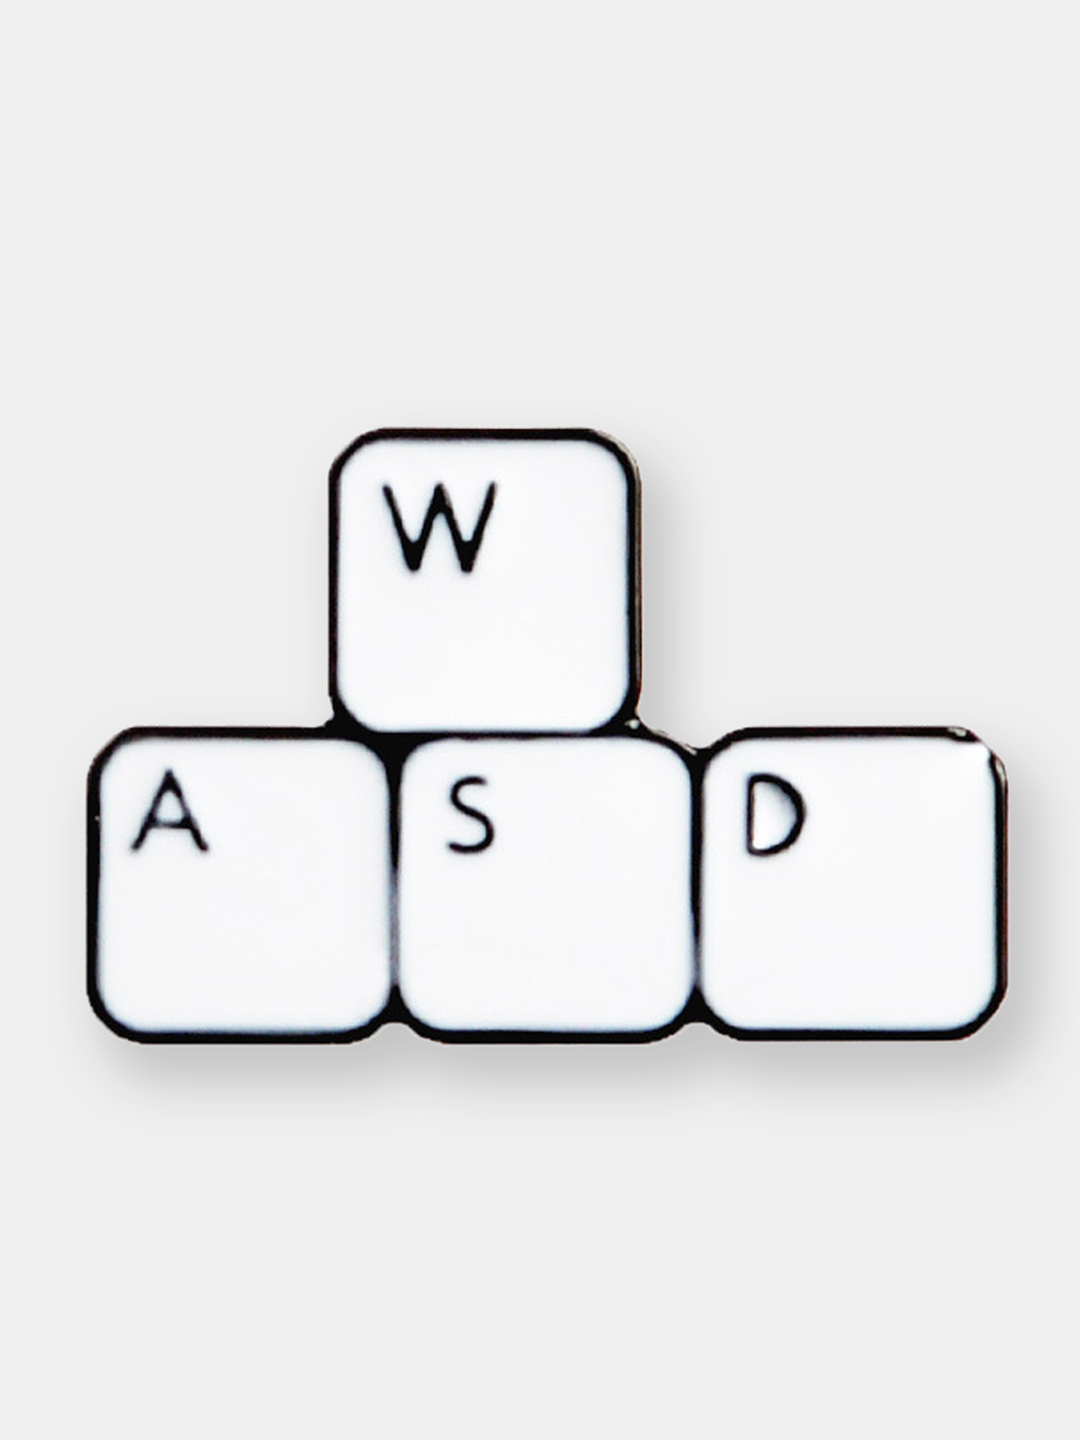 W A S D кнопки для клавиатуры